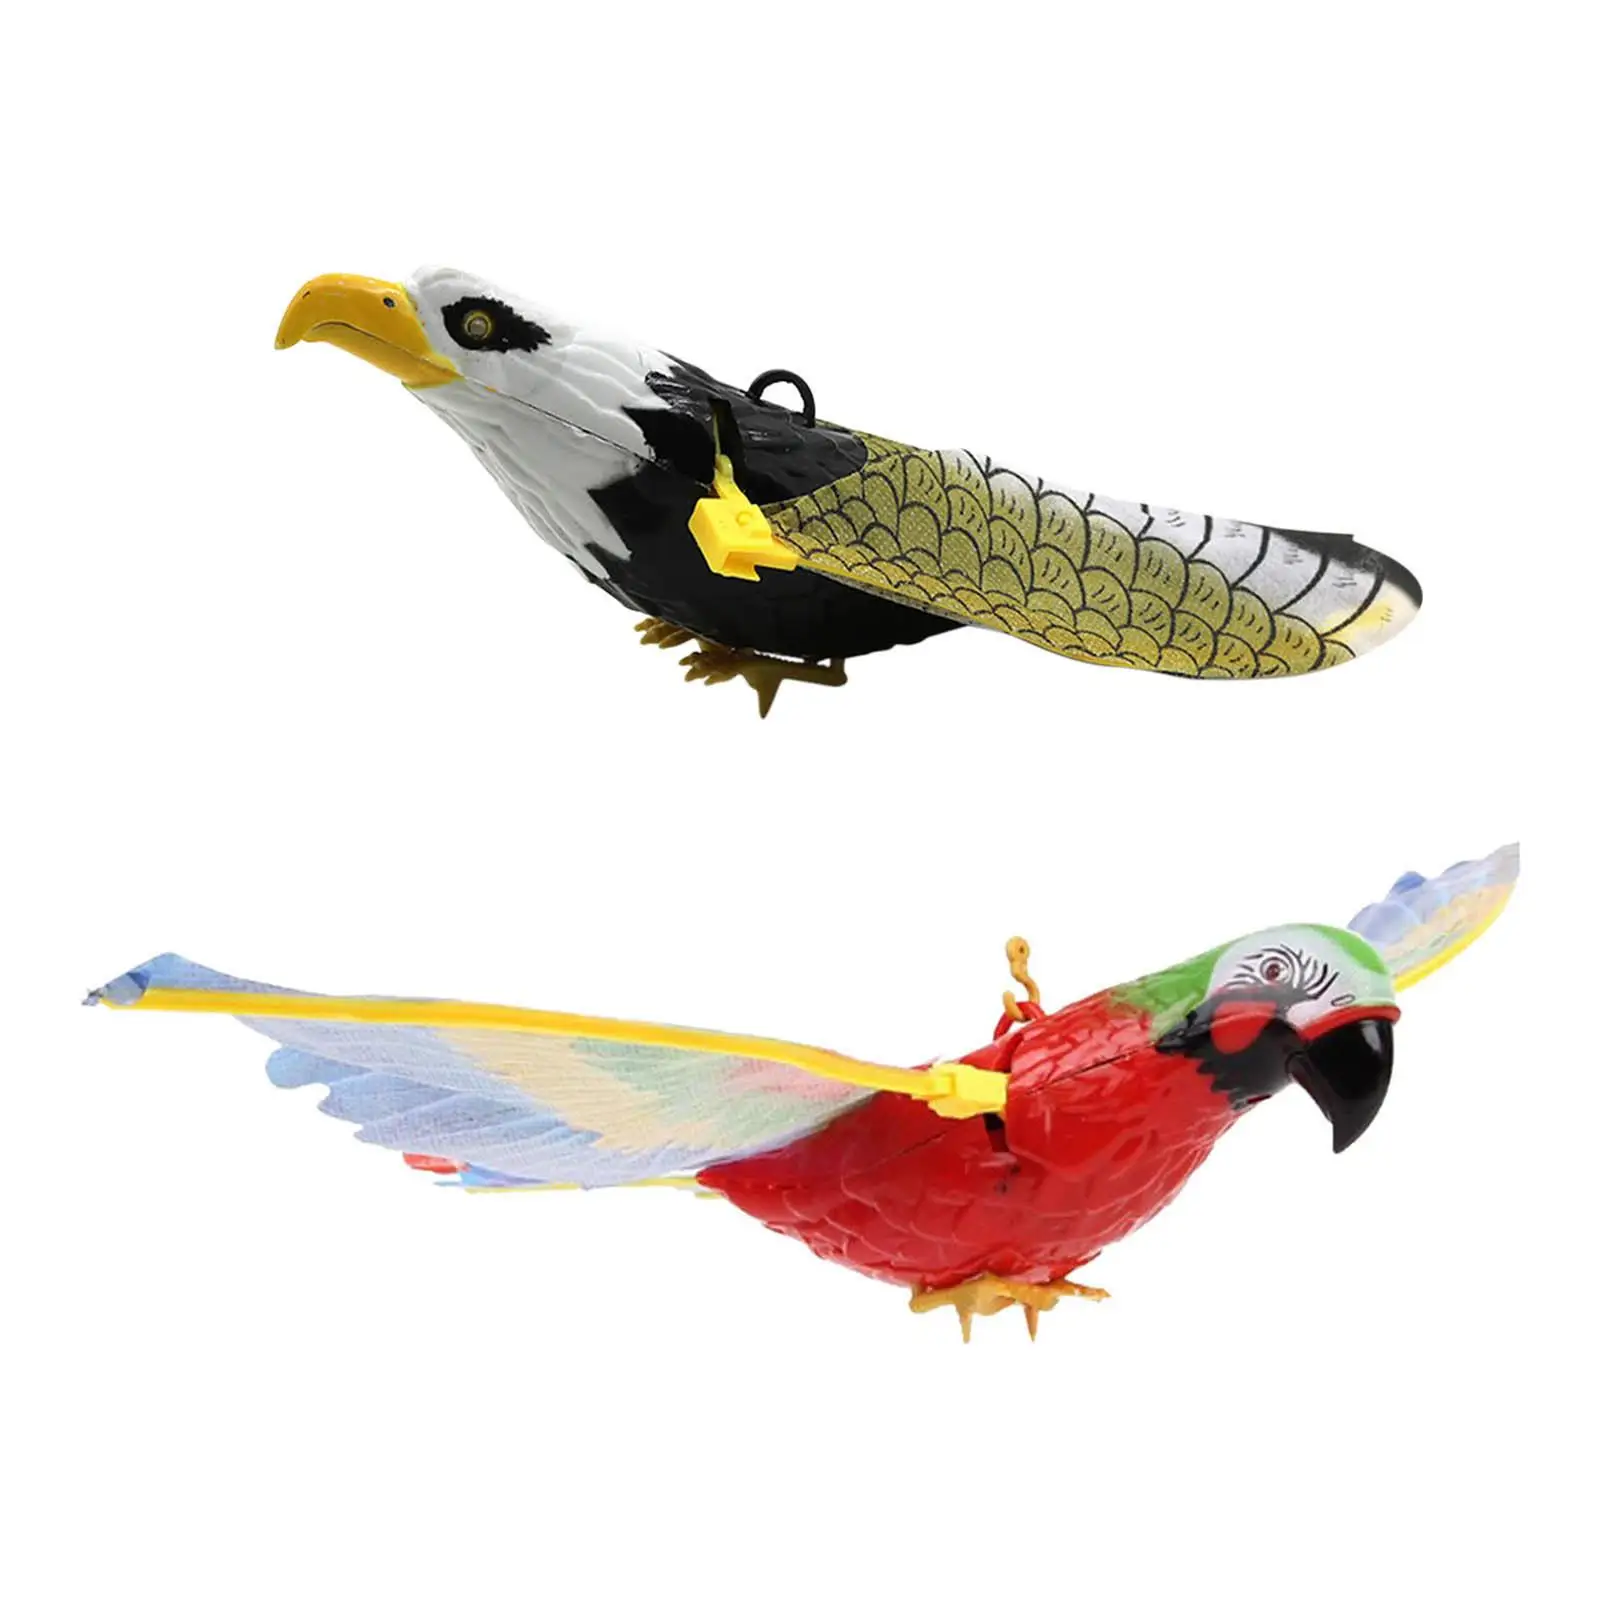 

Bird Scarer Flying Kite Life Size with Light Sound Pest Control Bird Repellent Deterrent Flying Bird for Yard Farm Garden